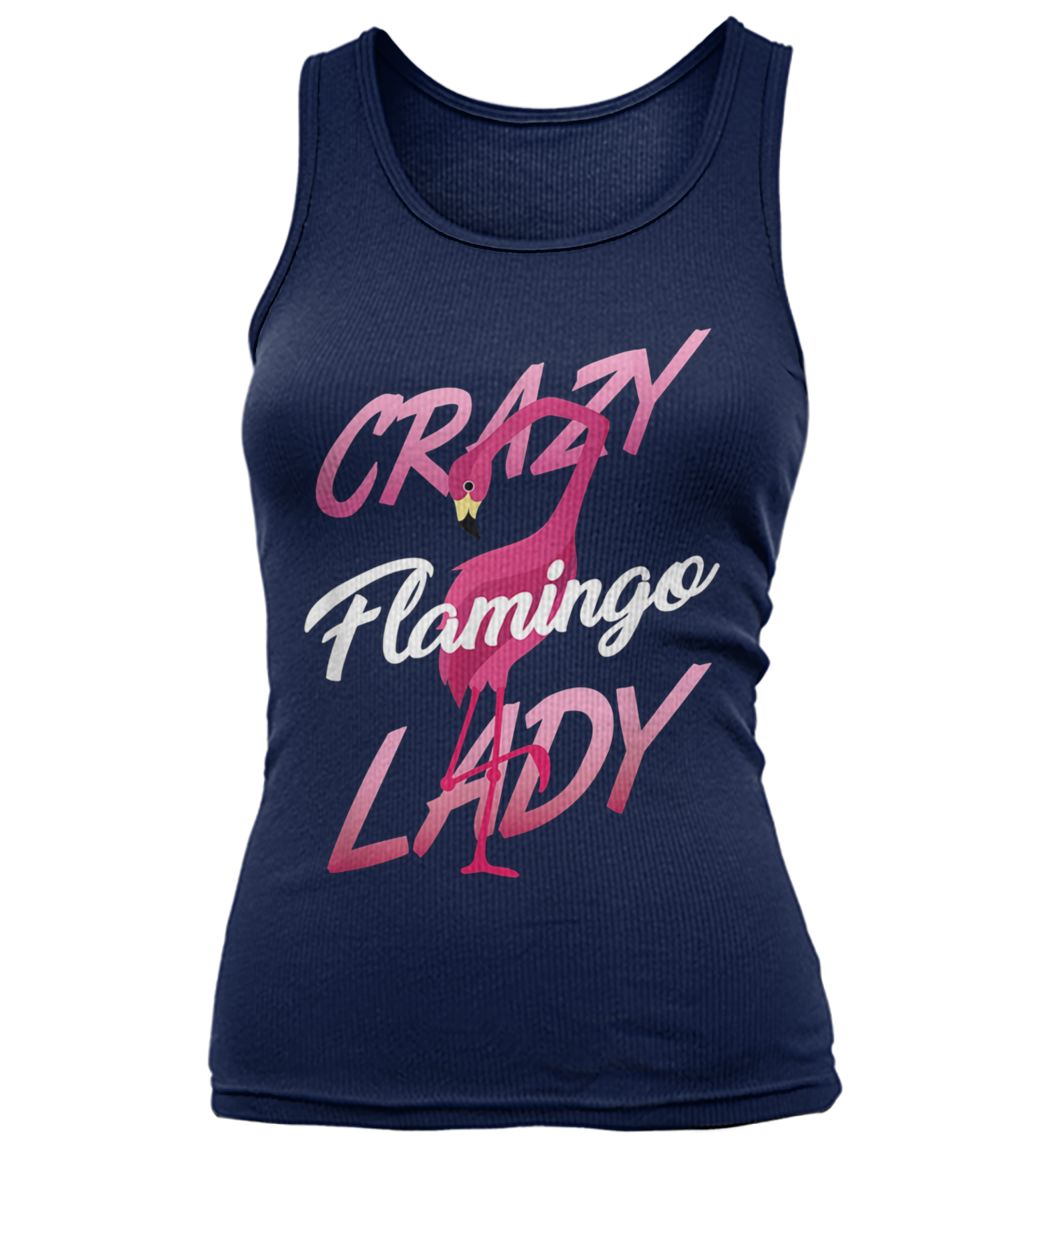 Crazy flamingo lady women's tank top